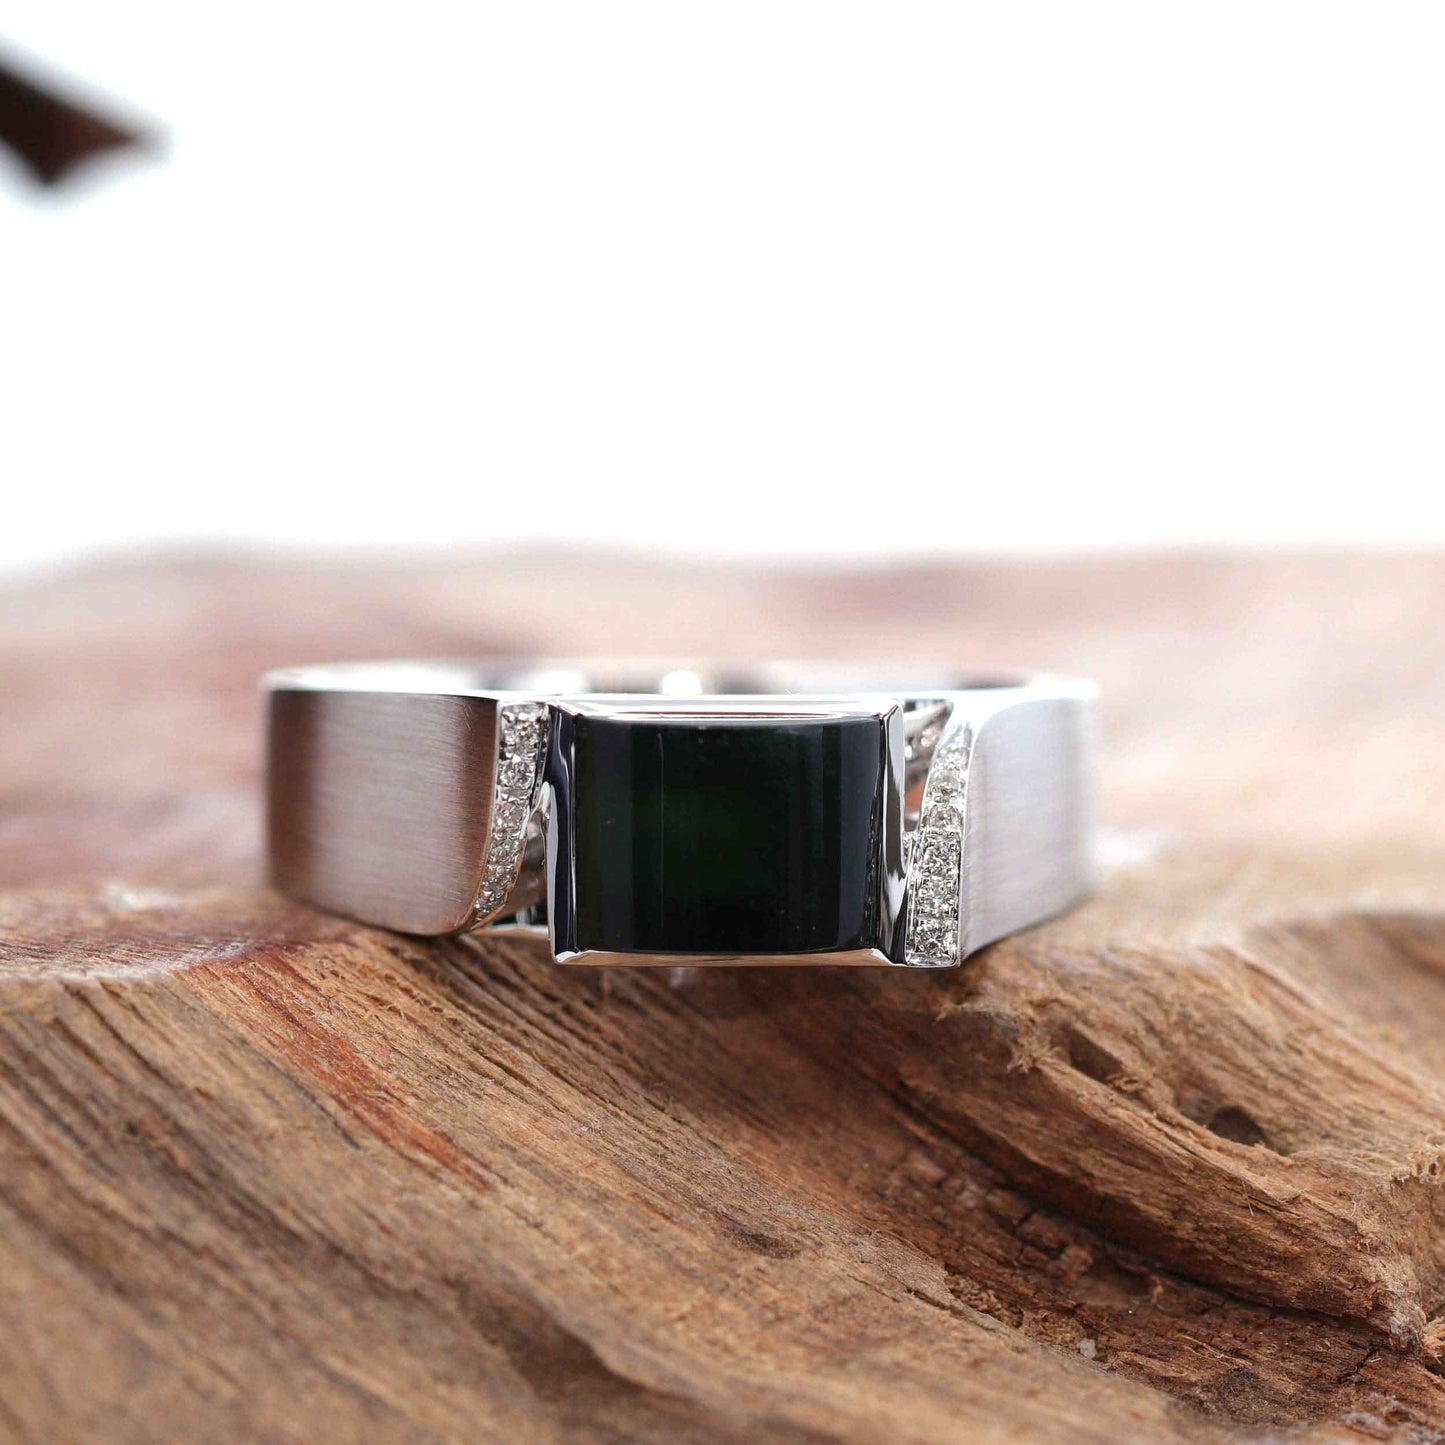 RealJade® "Classic Emerald Style" Genuine Burmese Emerald Cut Black Jadeite Jade Engagement Ring